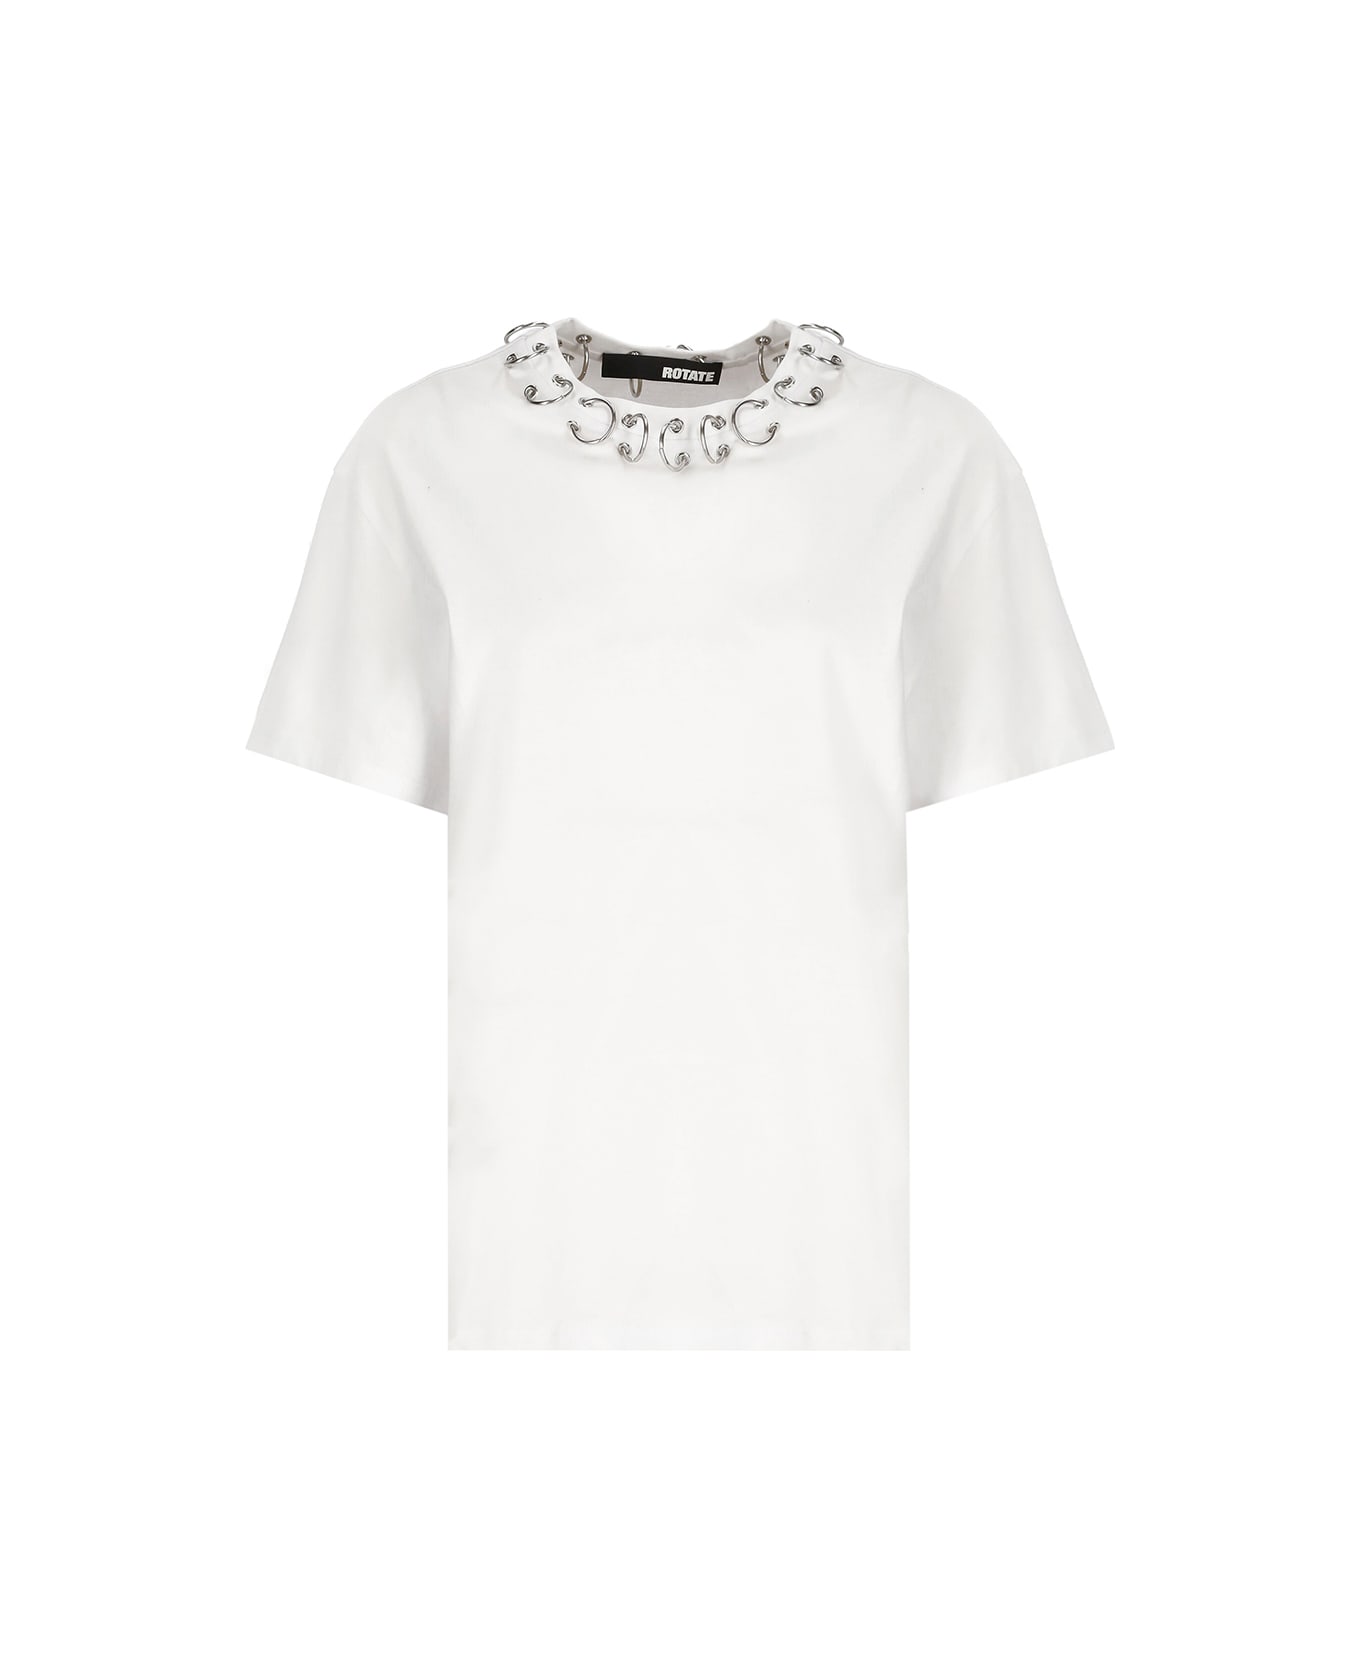 Rotate by Birger Christensen Oversize Ring T-shirt - White Tシャツ